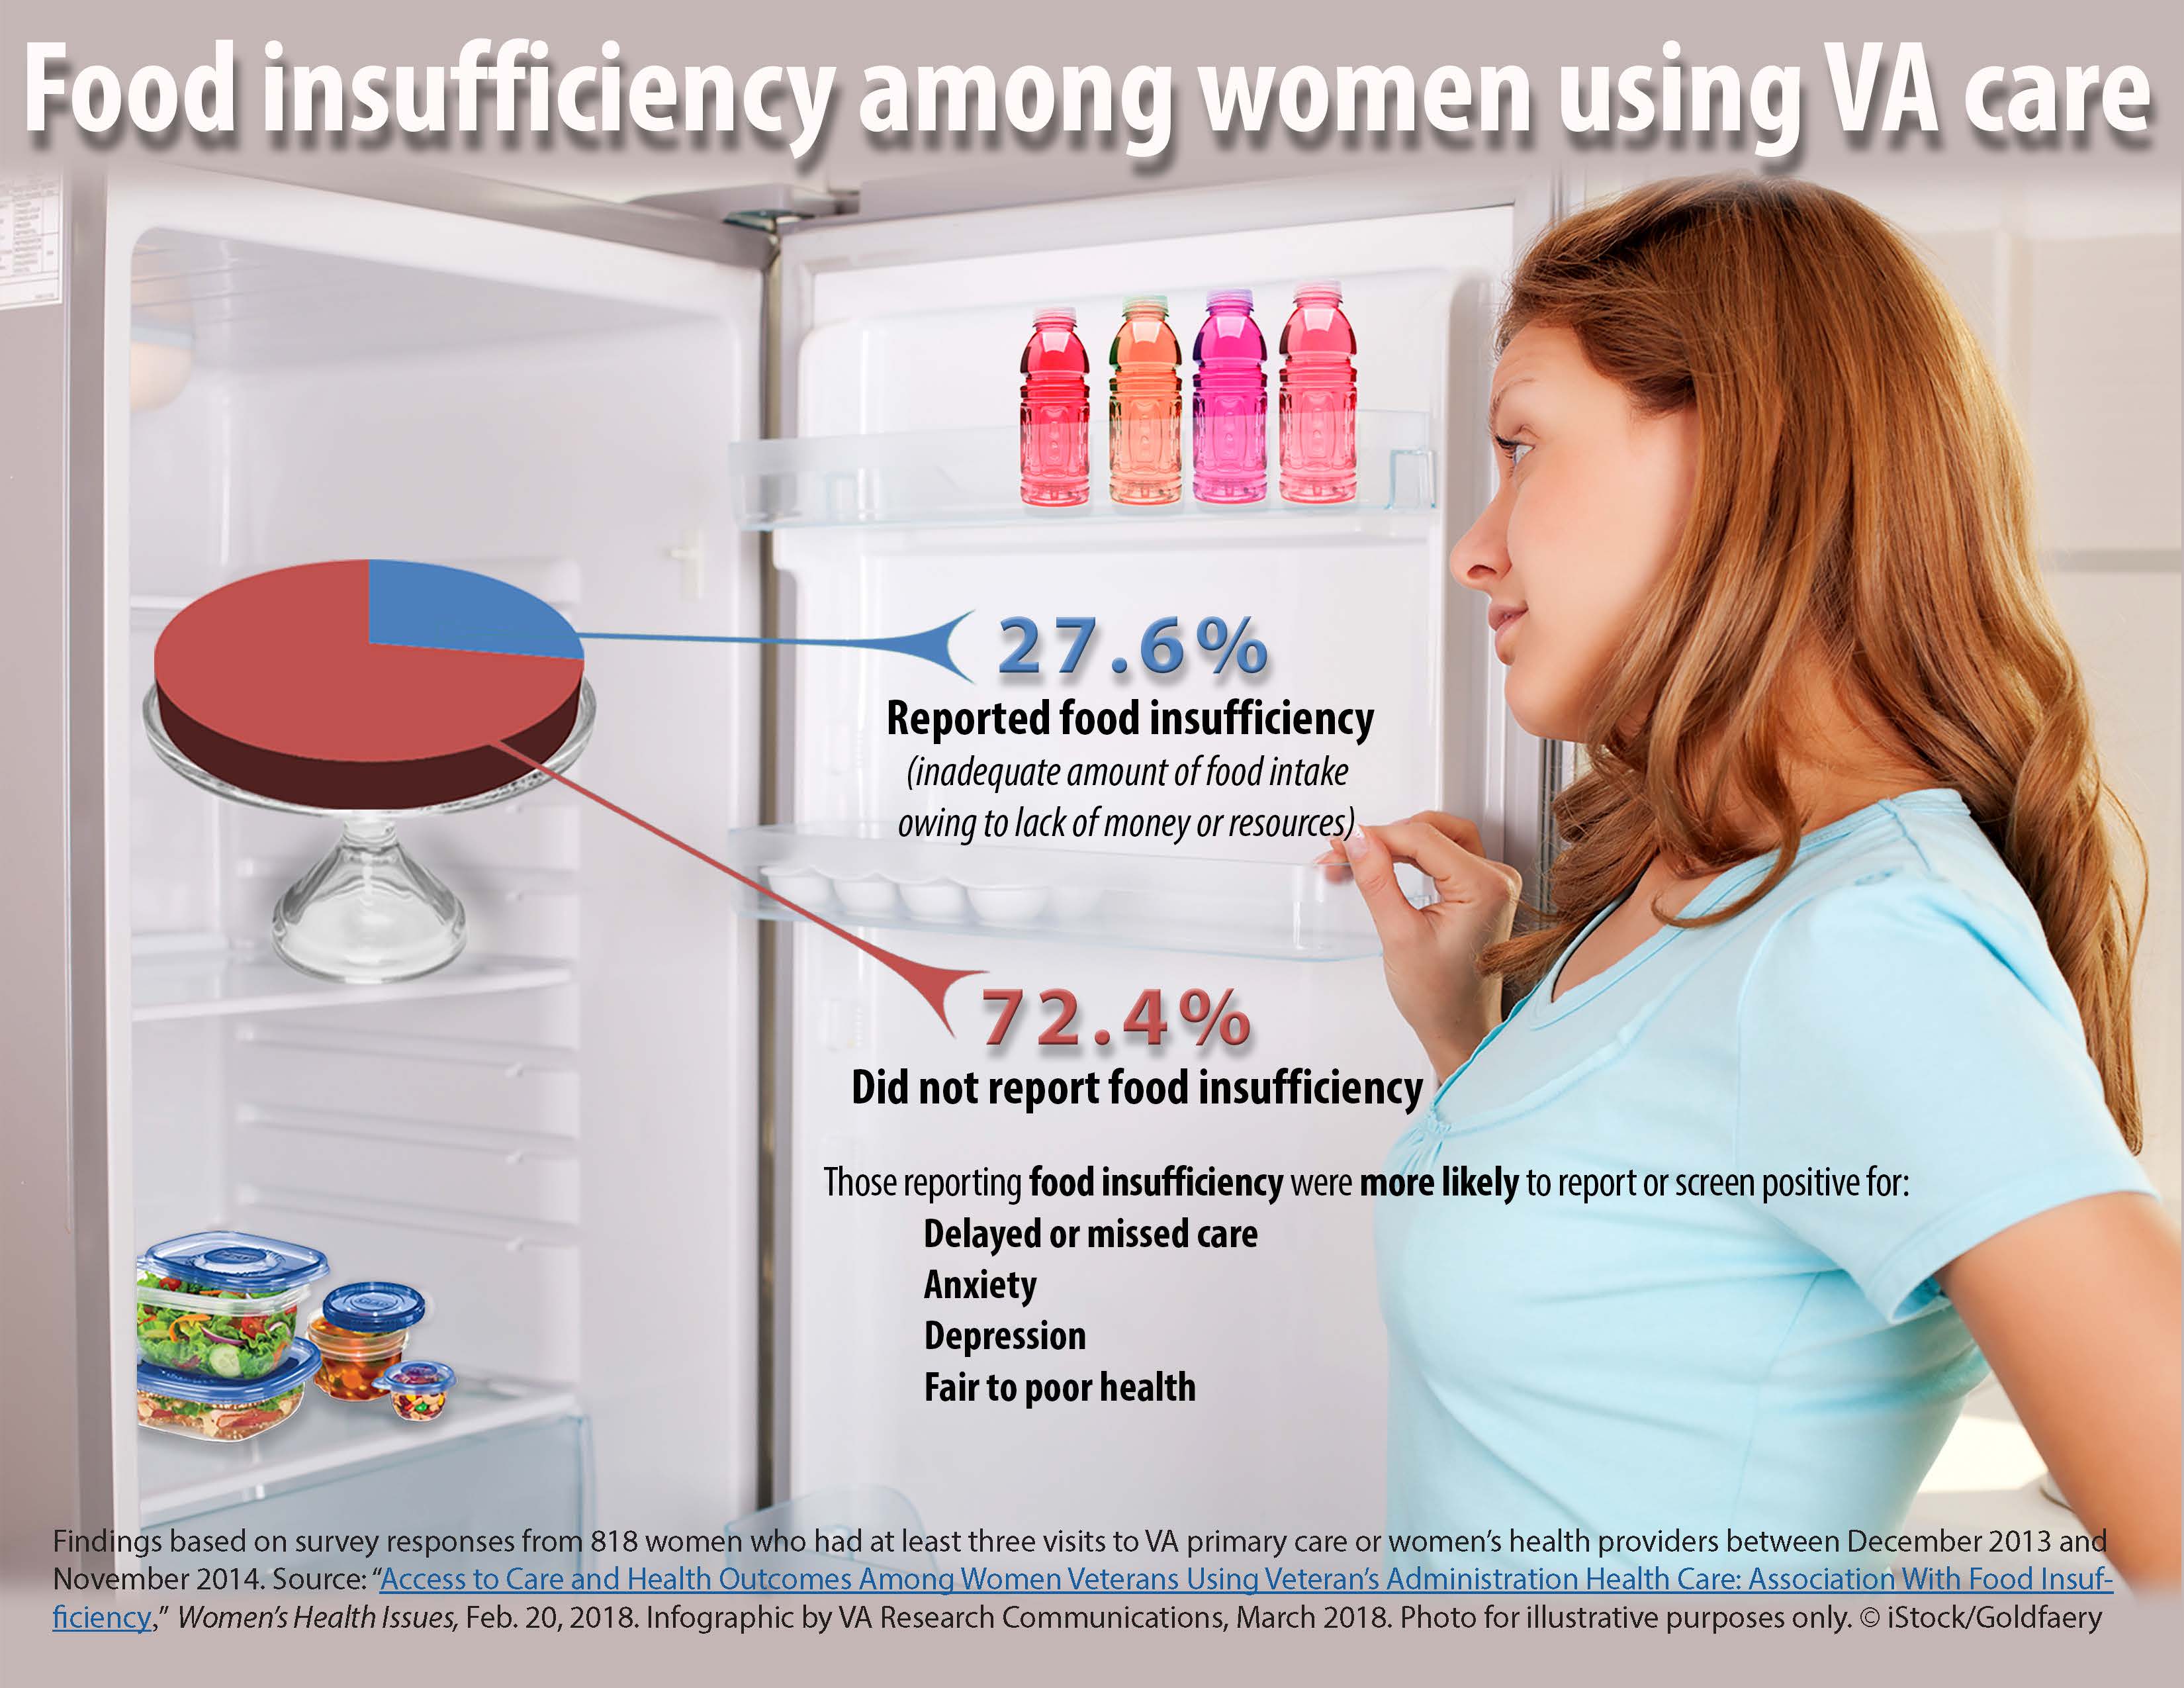 Food insufficiency among women who us VA care